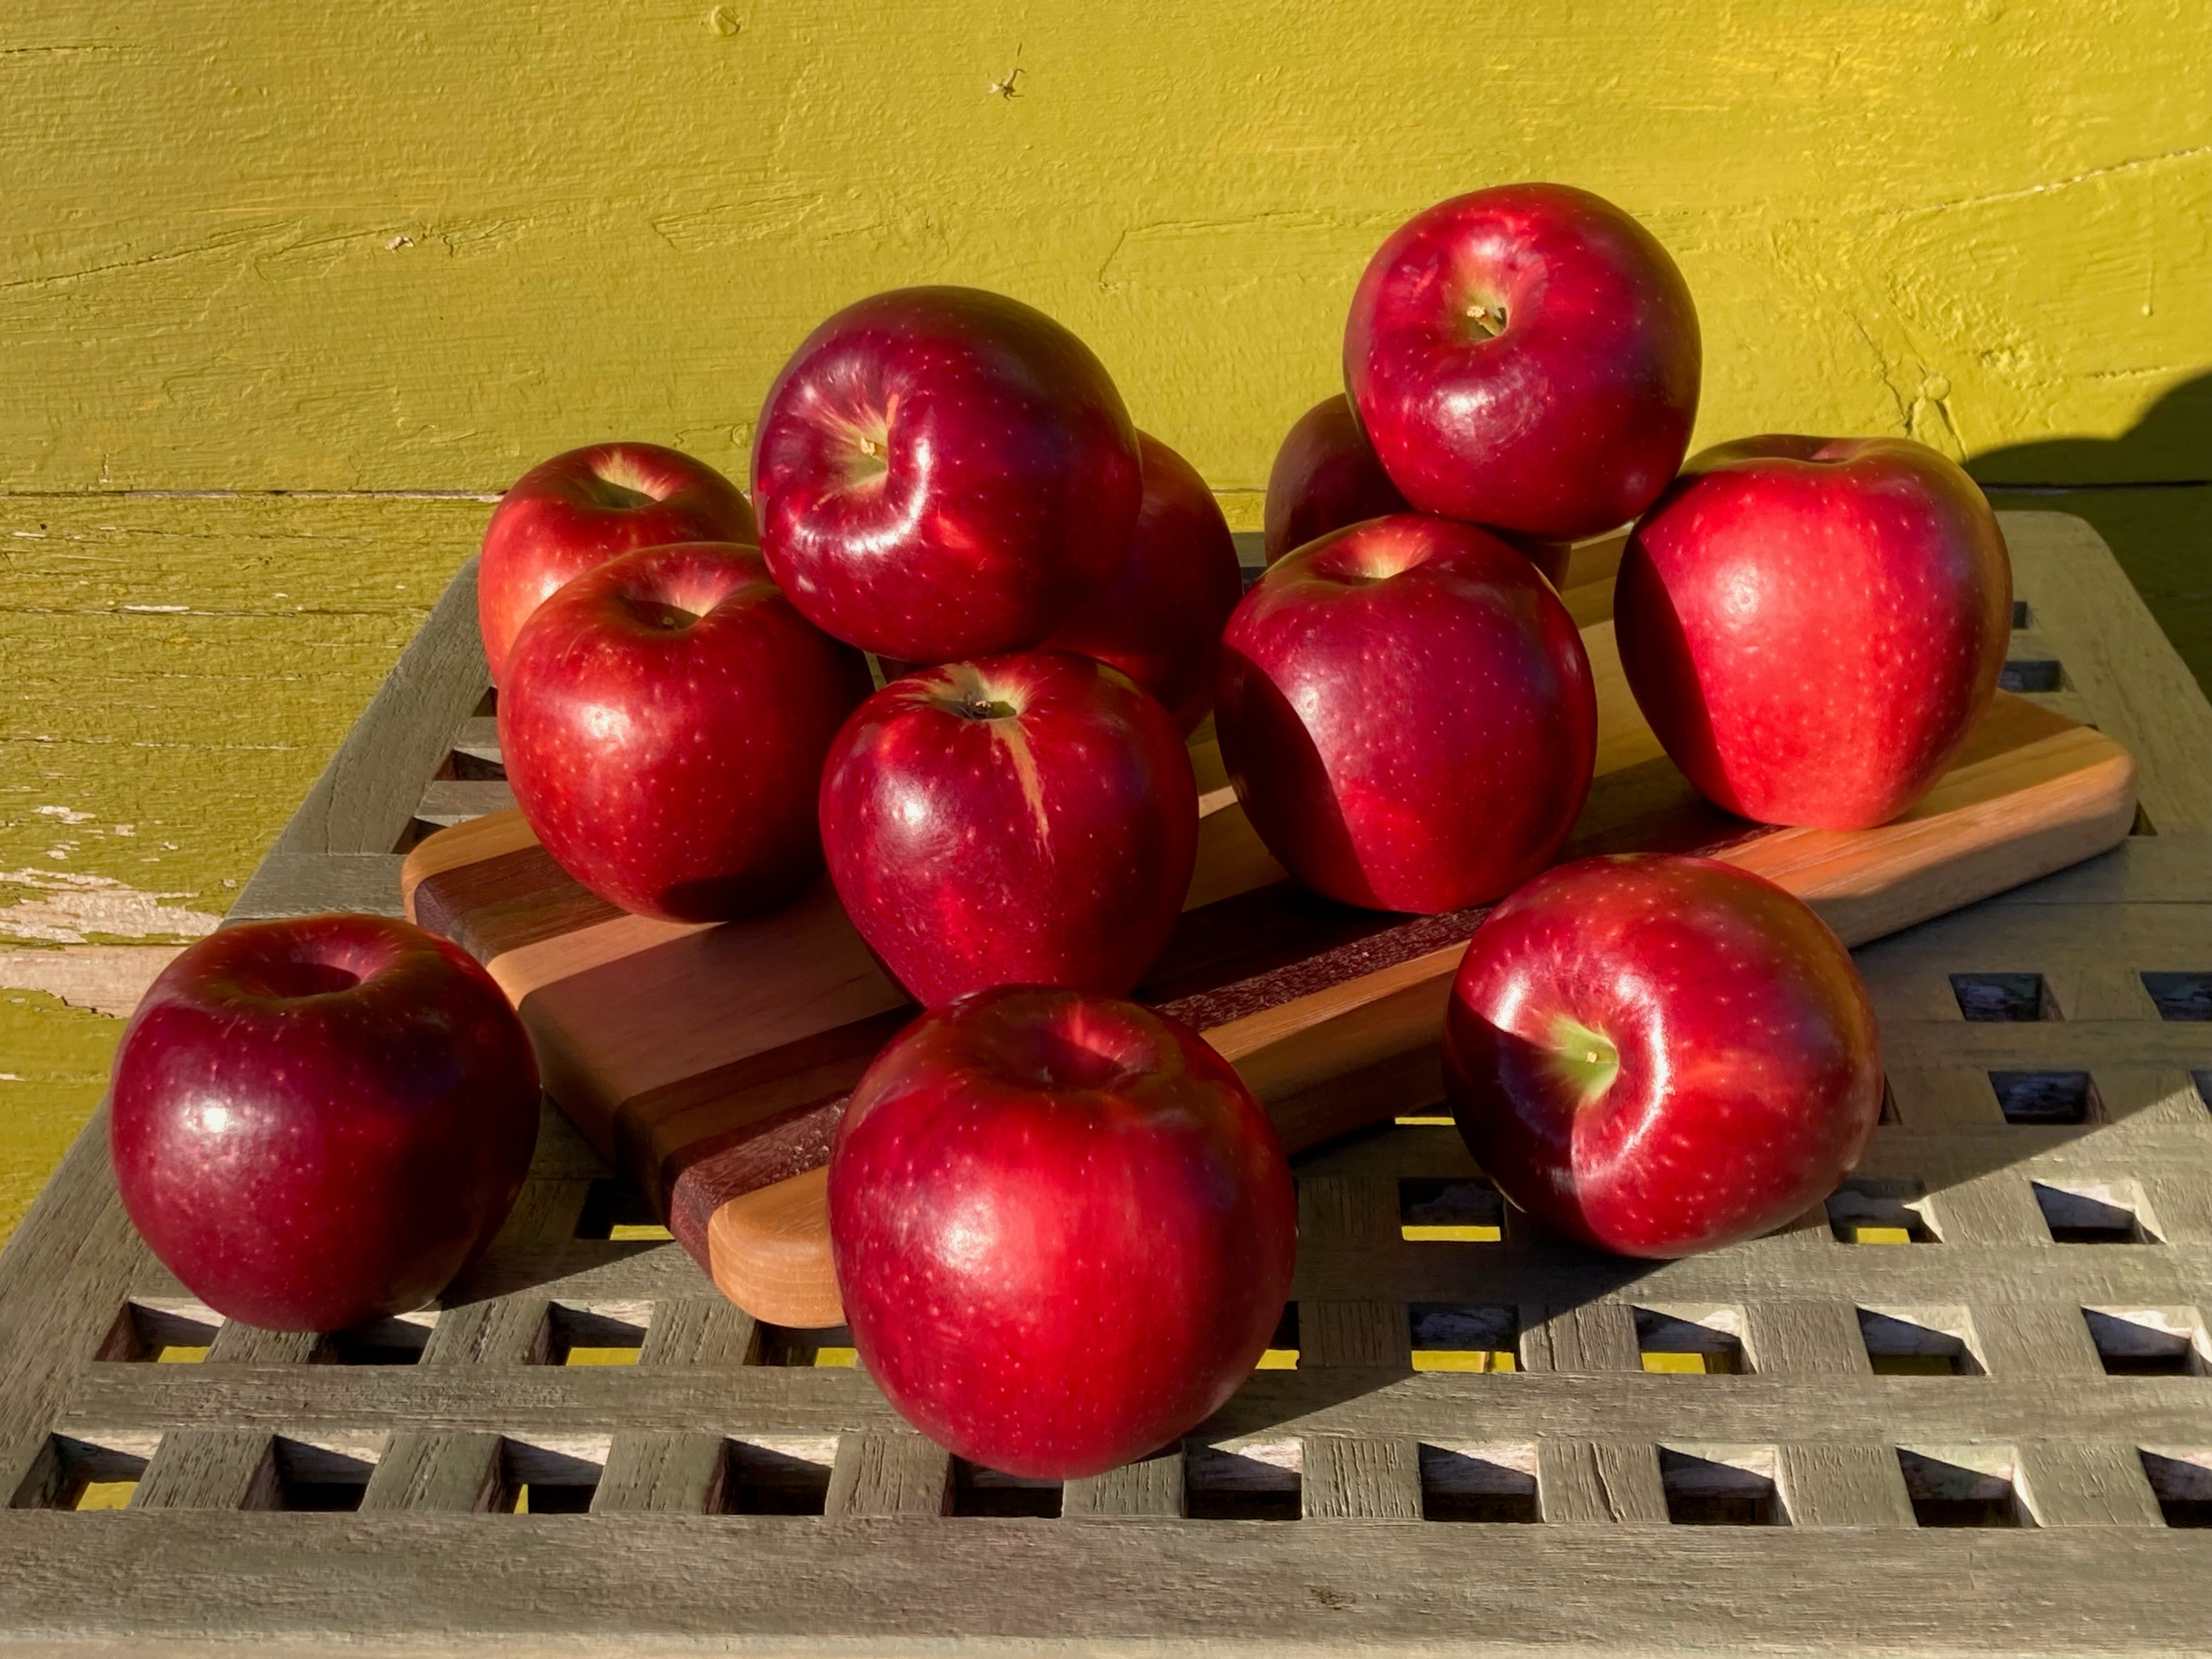 Organic Cosmic Crisp Apples